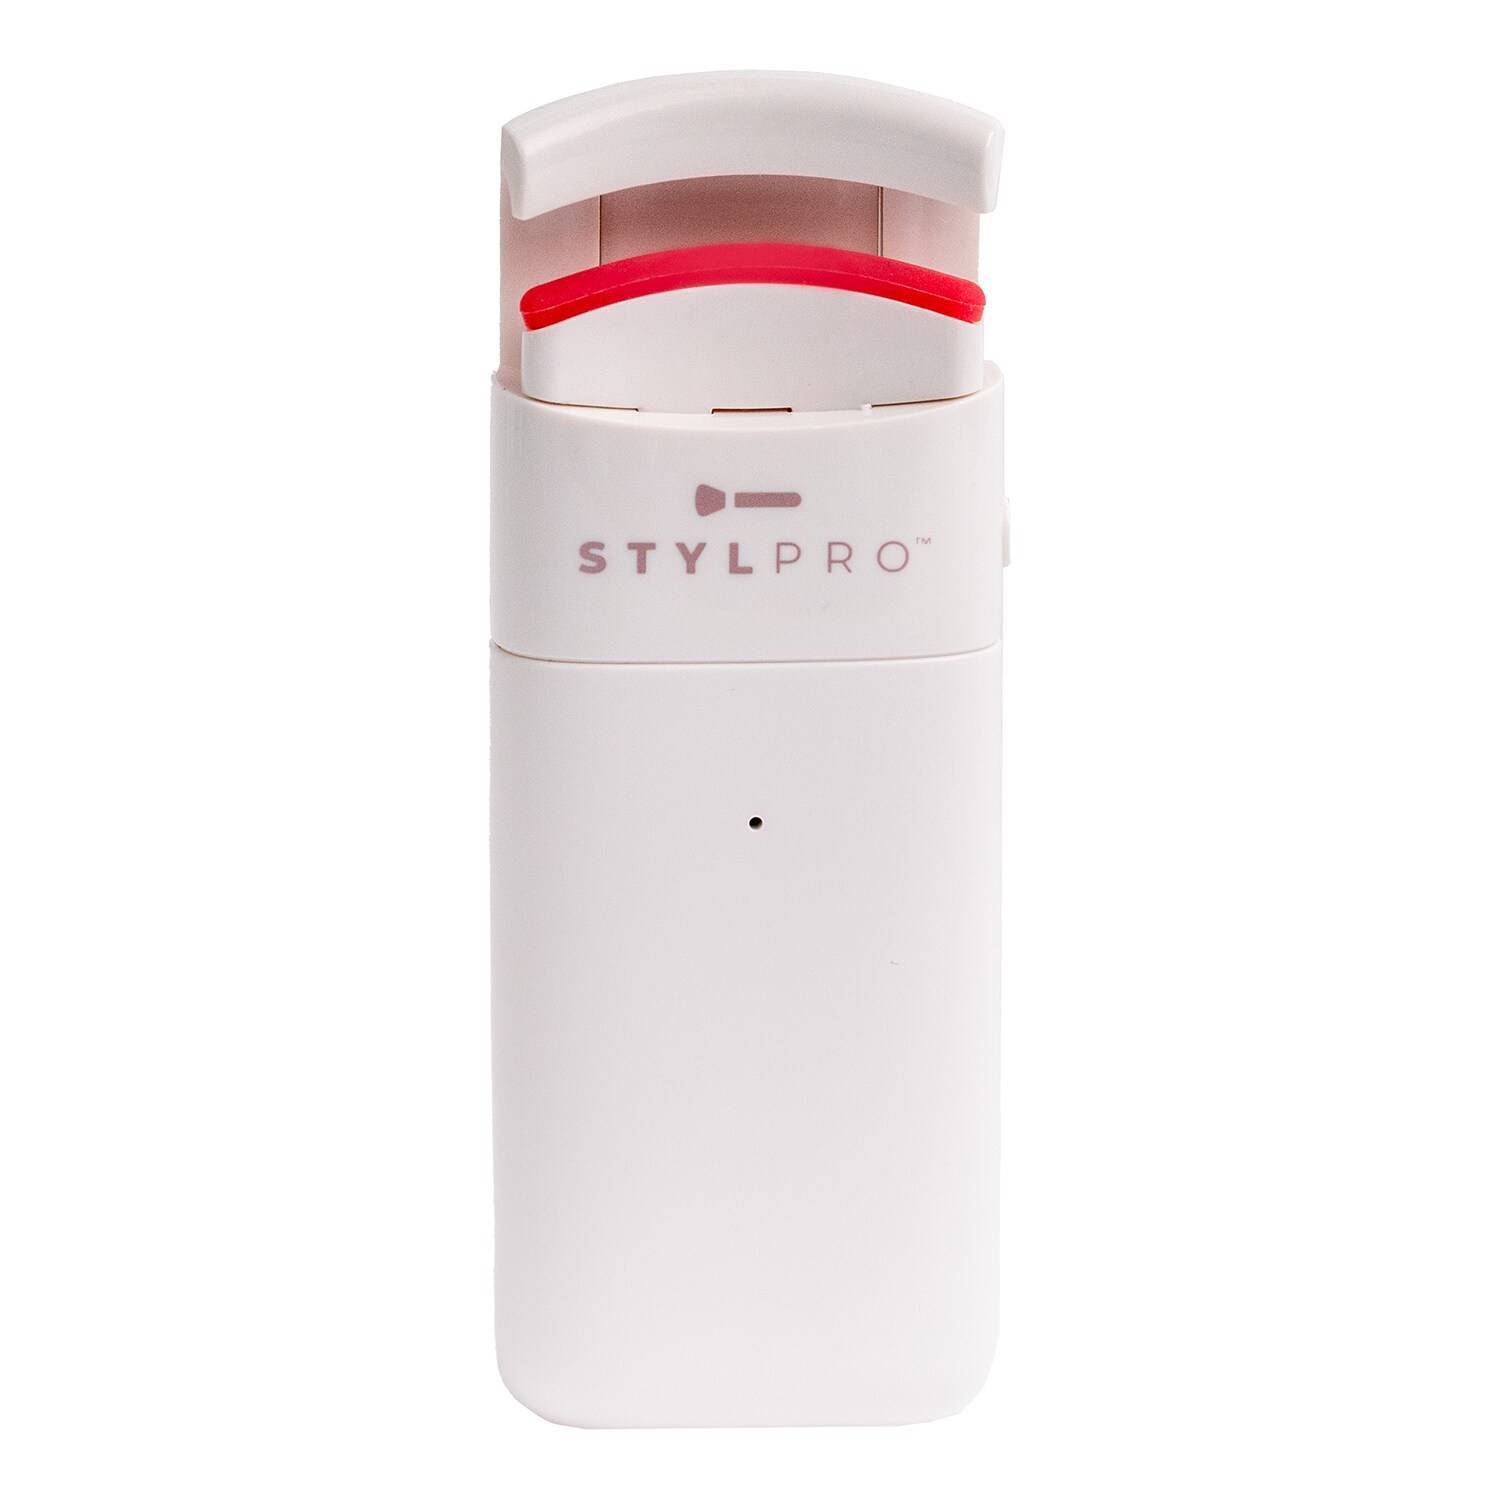 Stylpro Hot Lash Portable Heated Eyelash Curler